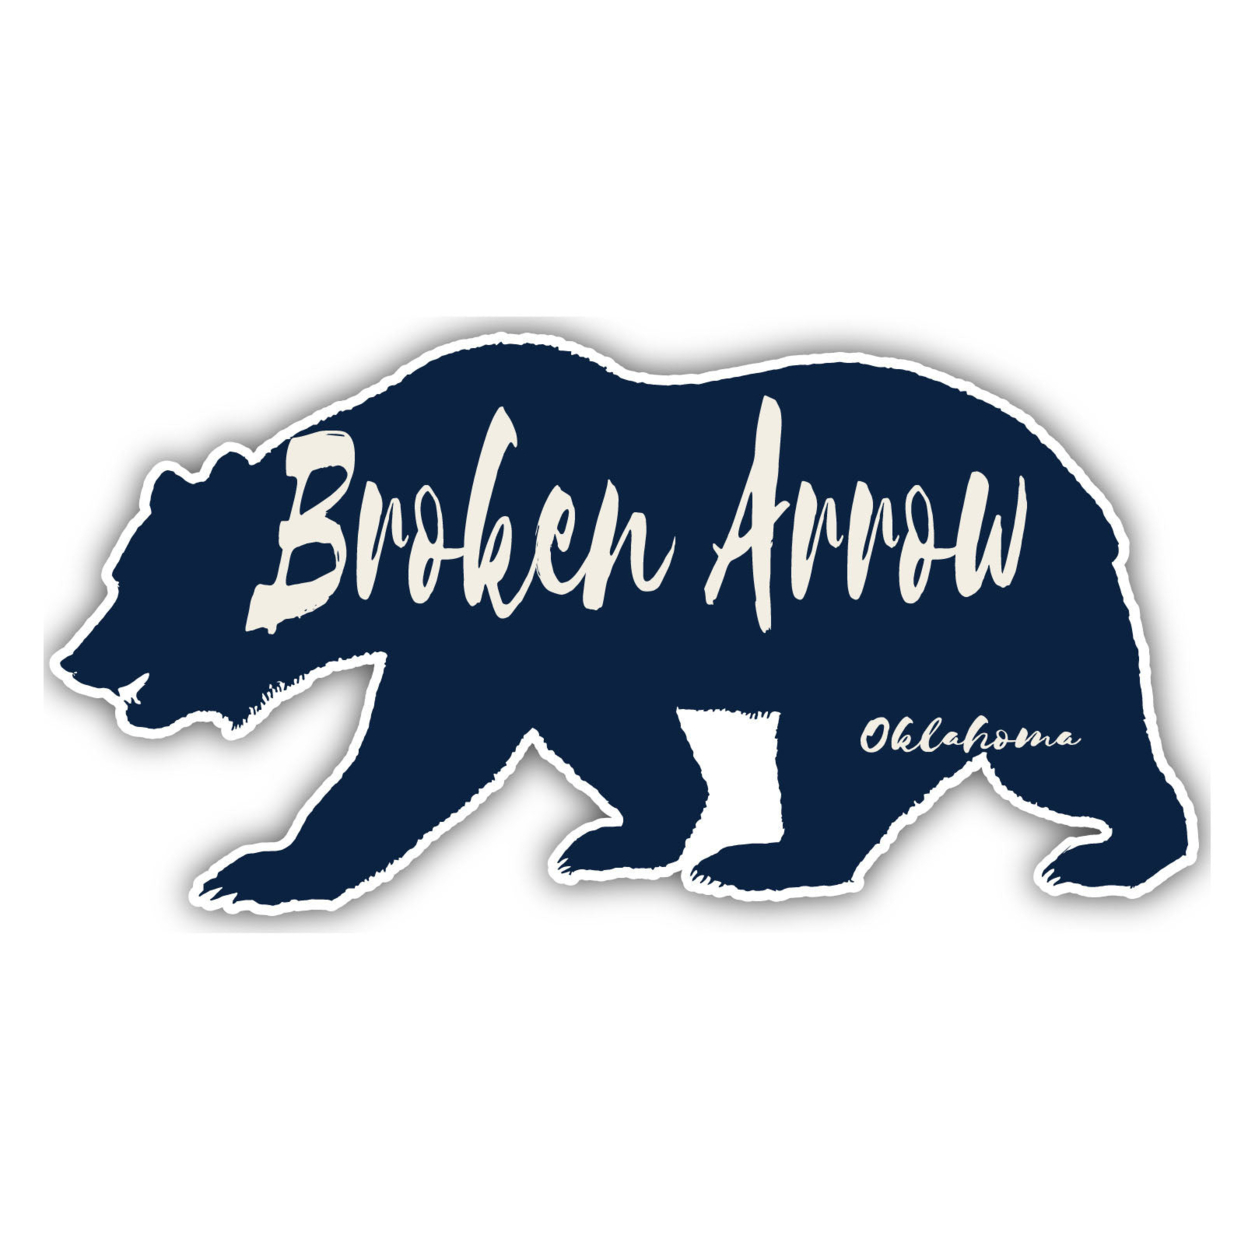 Broken Arrow Oklahoma Souvenir Decorative Stickers (Choose Theme And Size) - Single Unit, 2-Inch, Great Outdoors